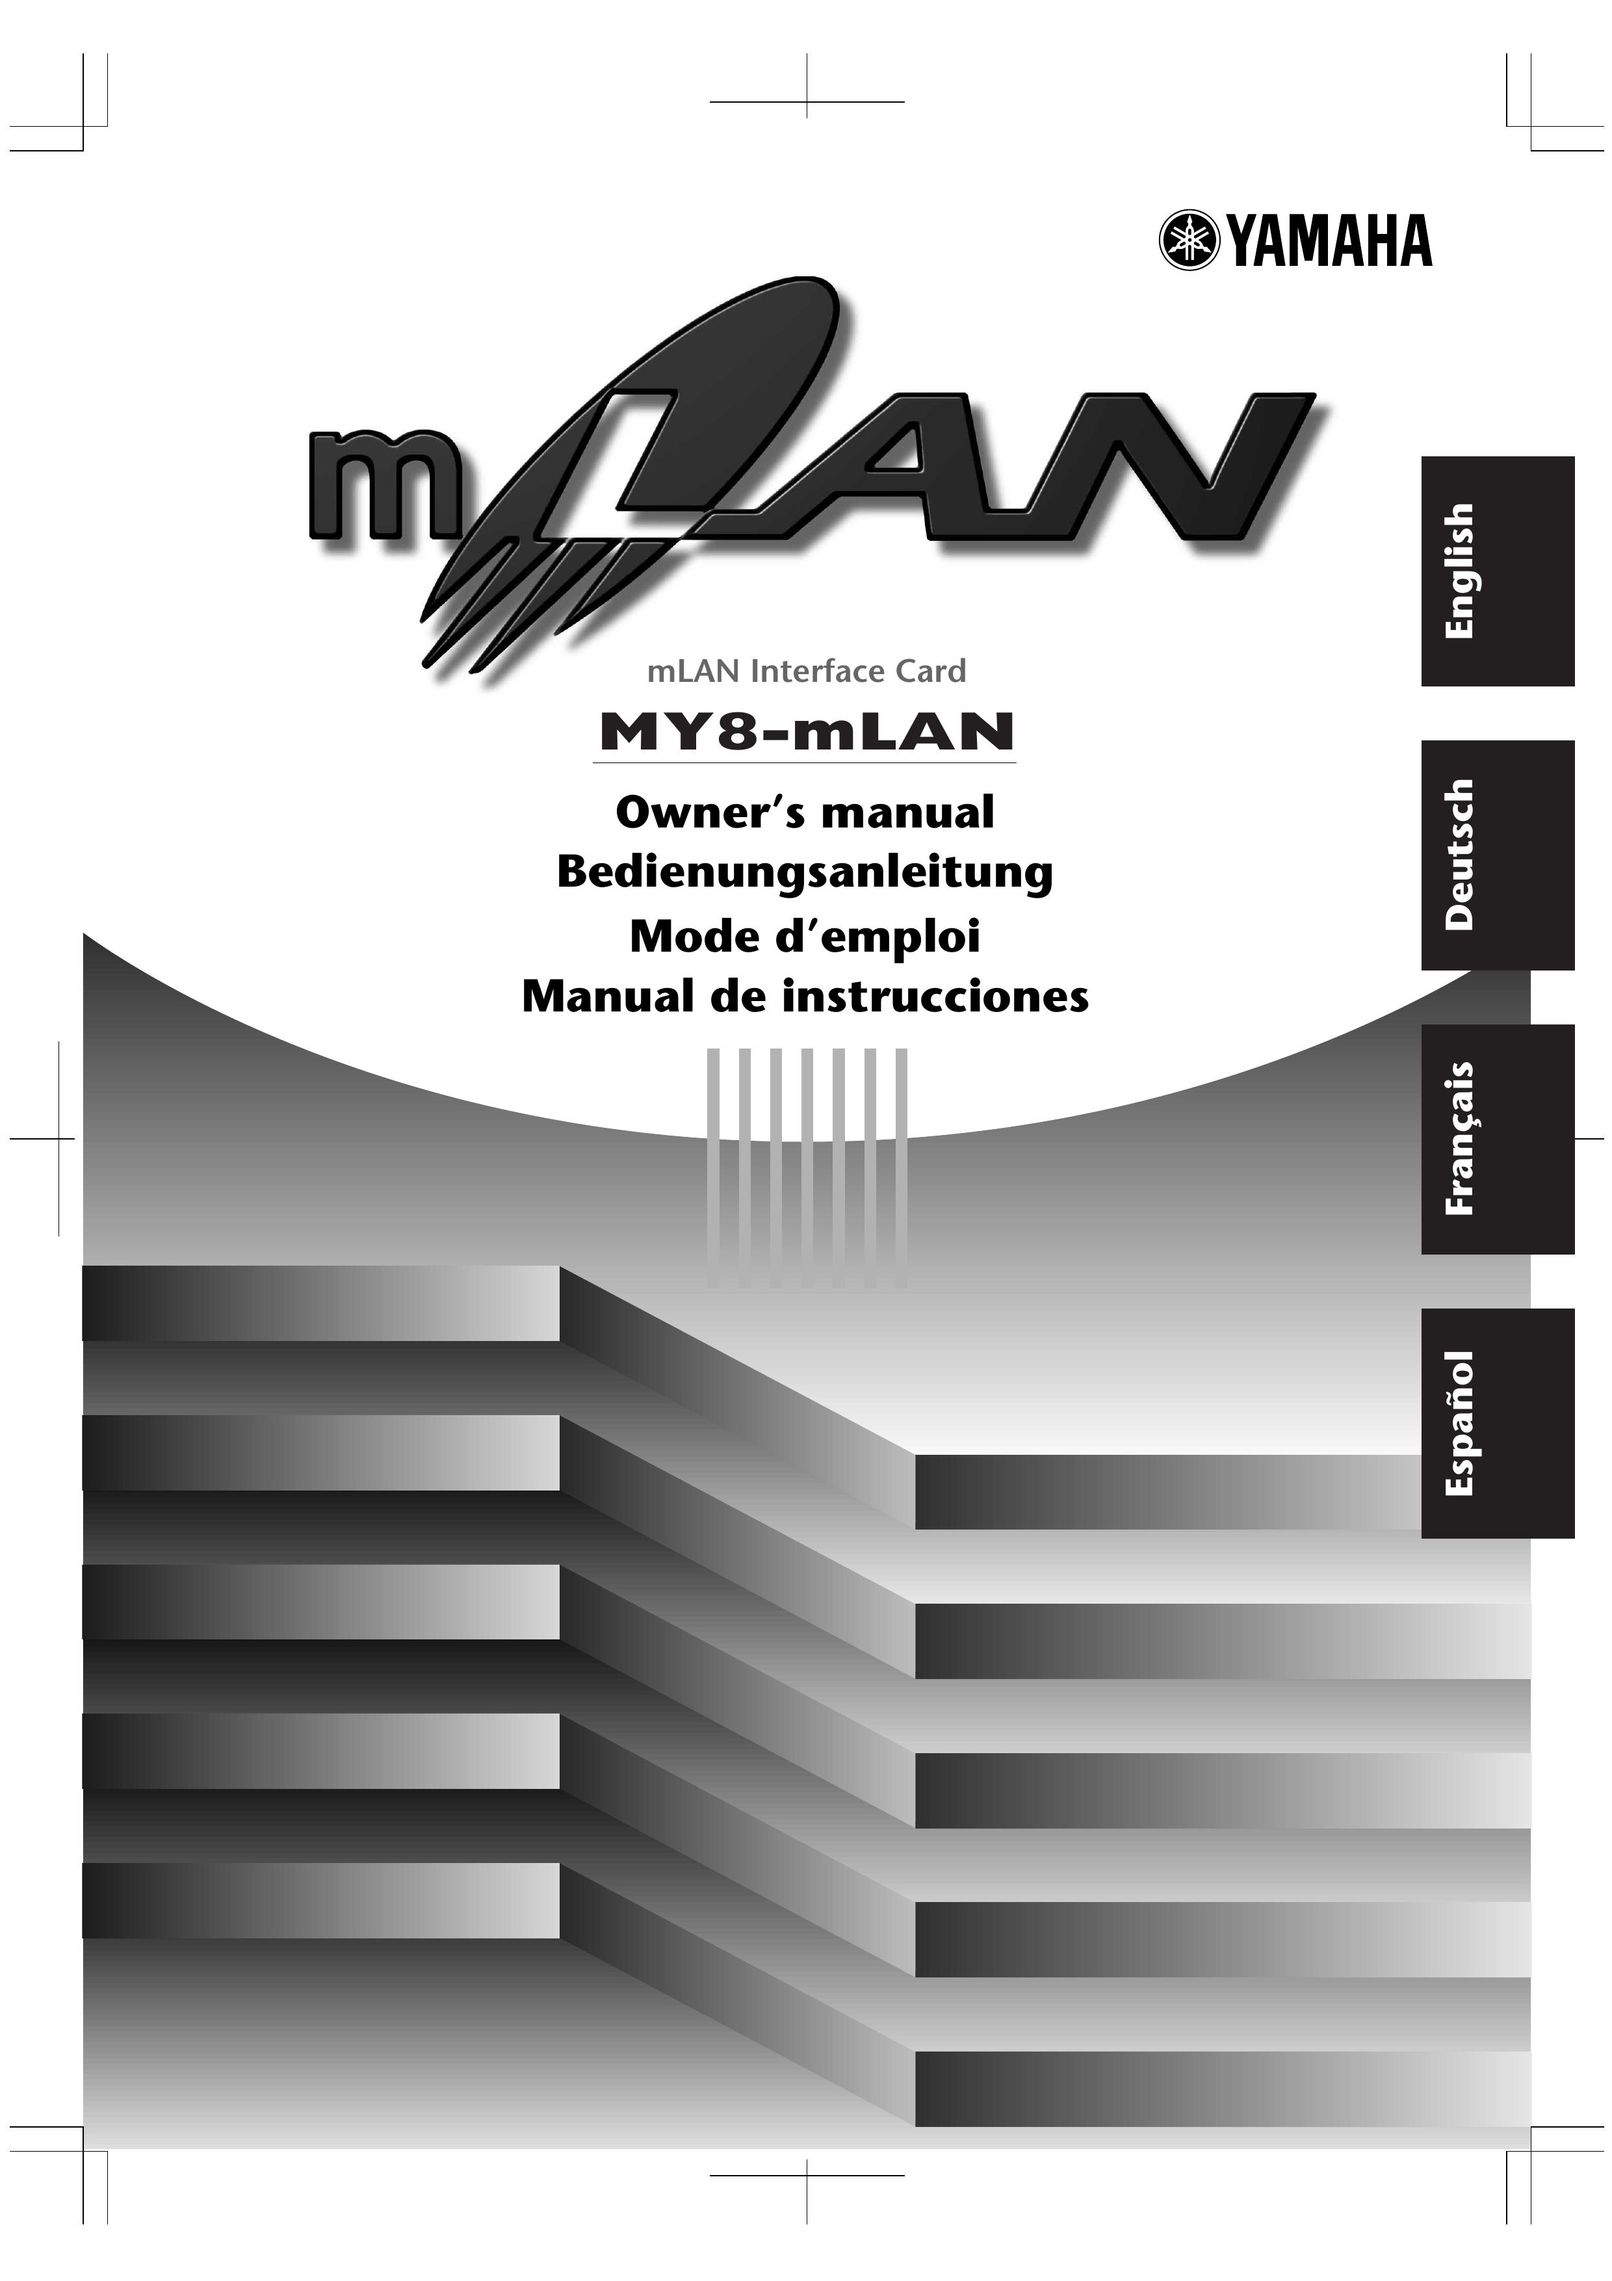 Yamaha MY8-mLAN Network Card User Manual